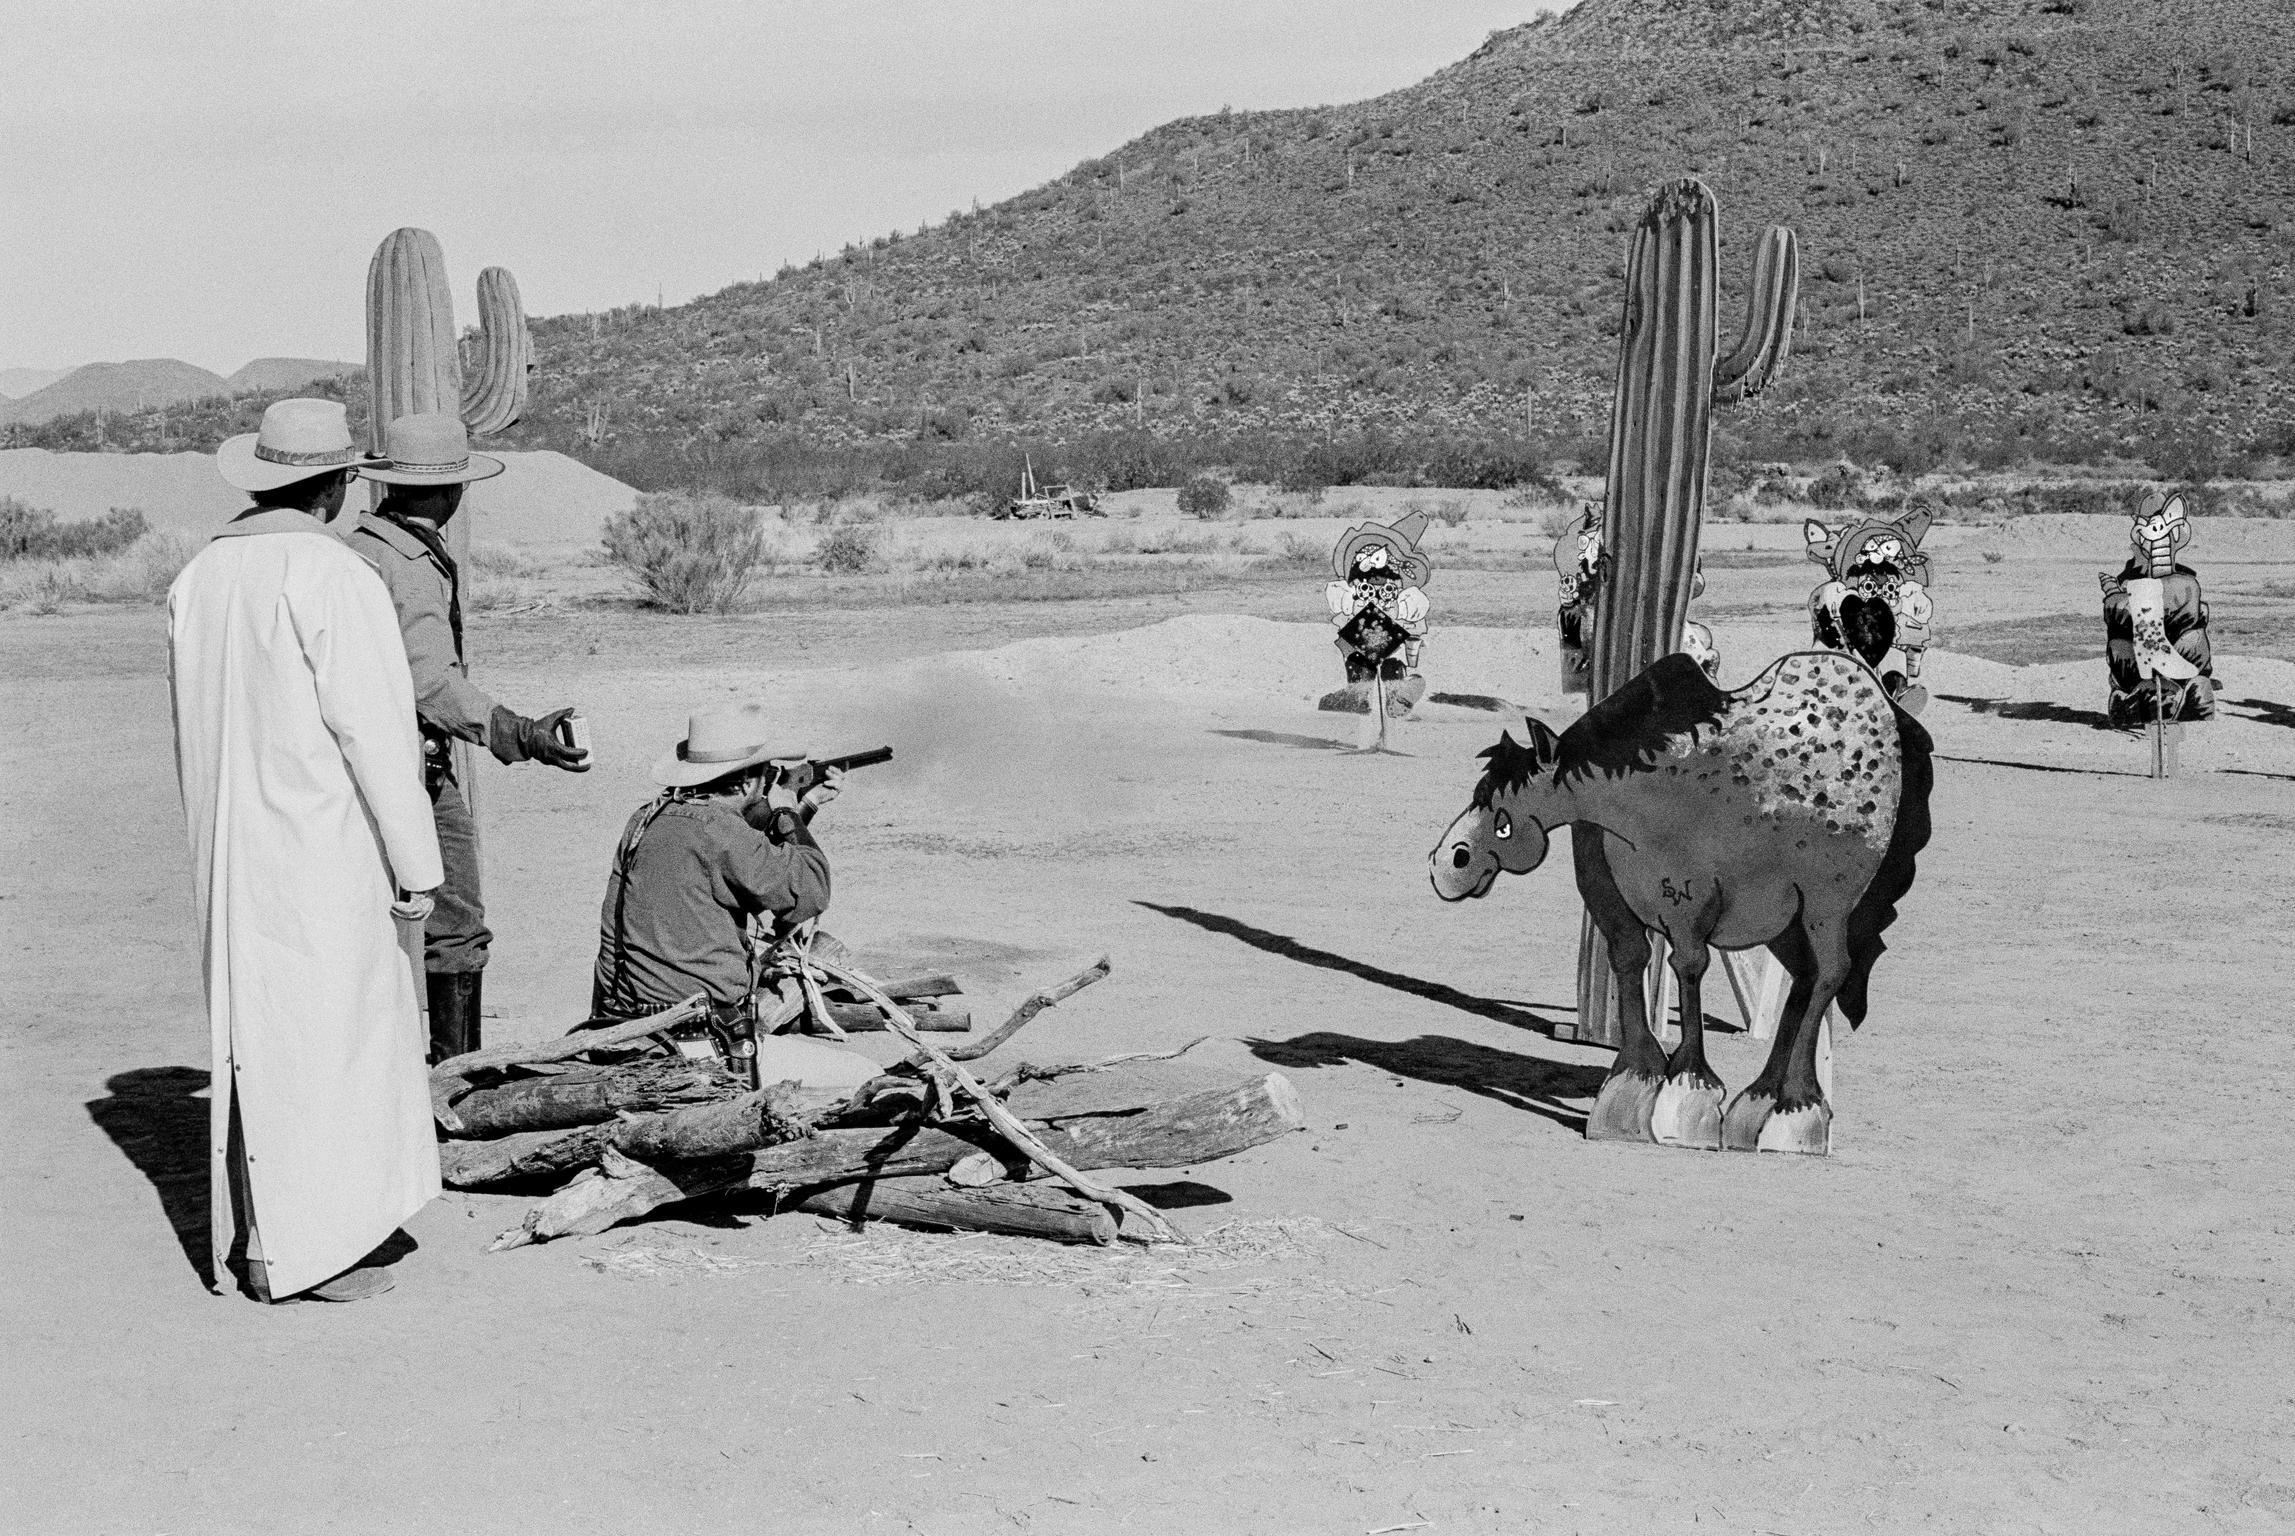 Cowboy Action Shooting. Winter Range, Phoenix. Arizona USA